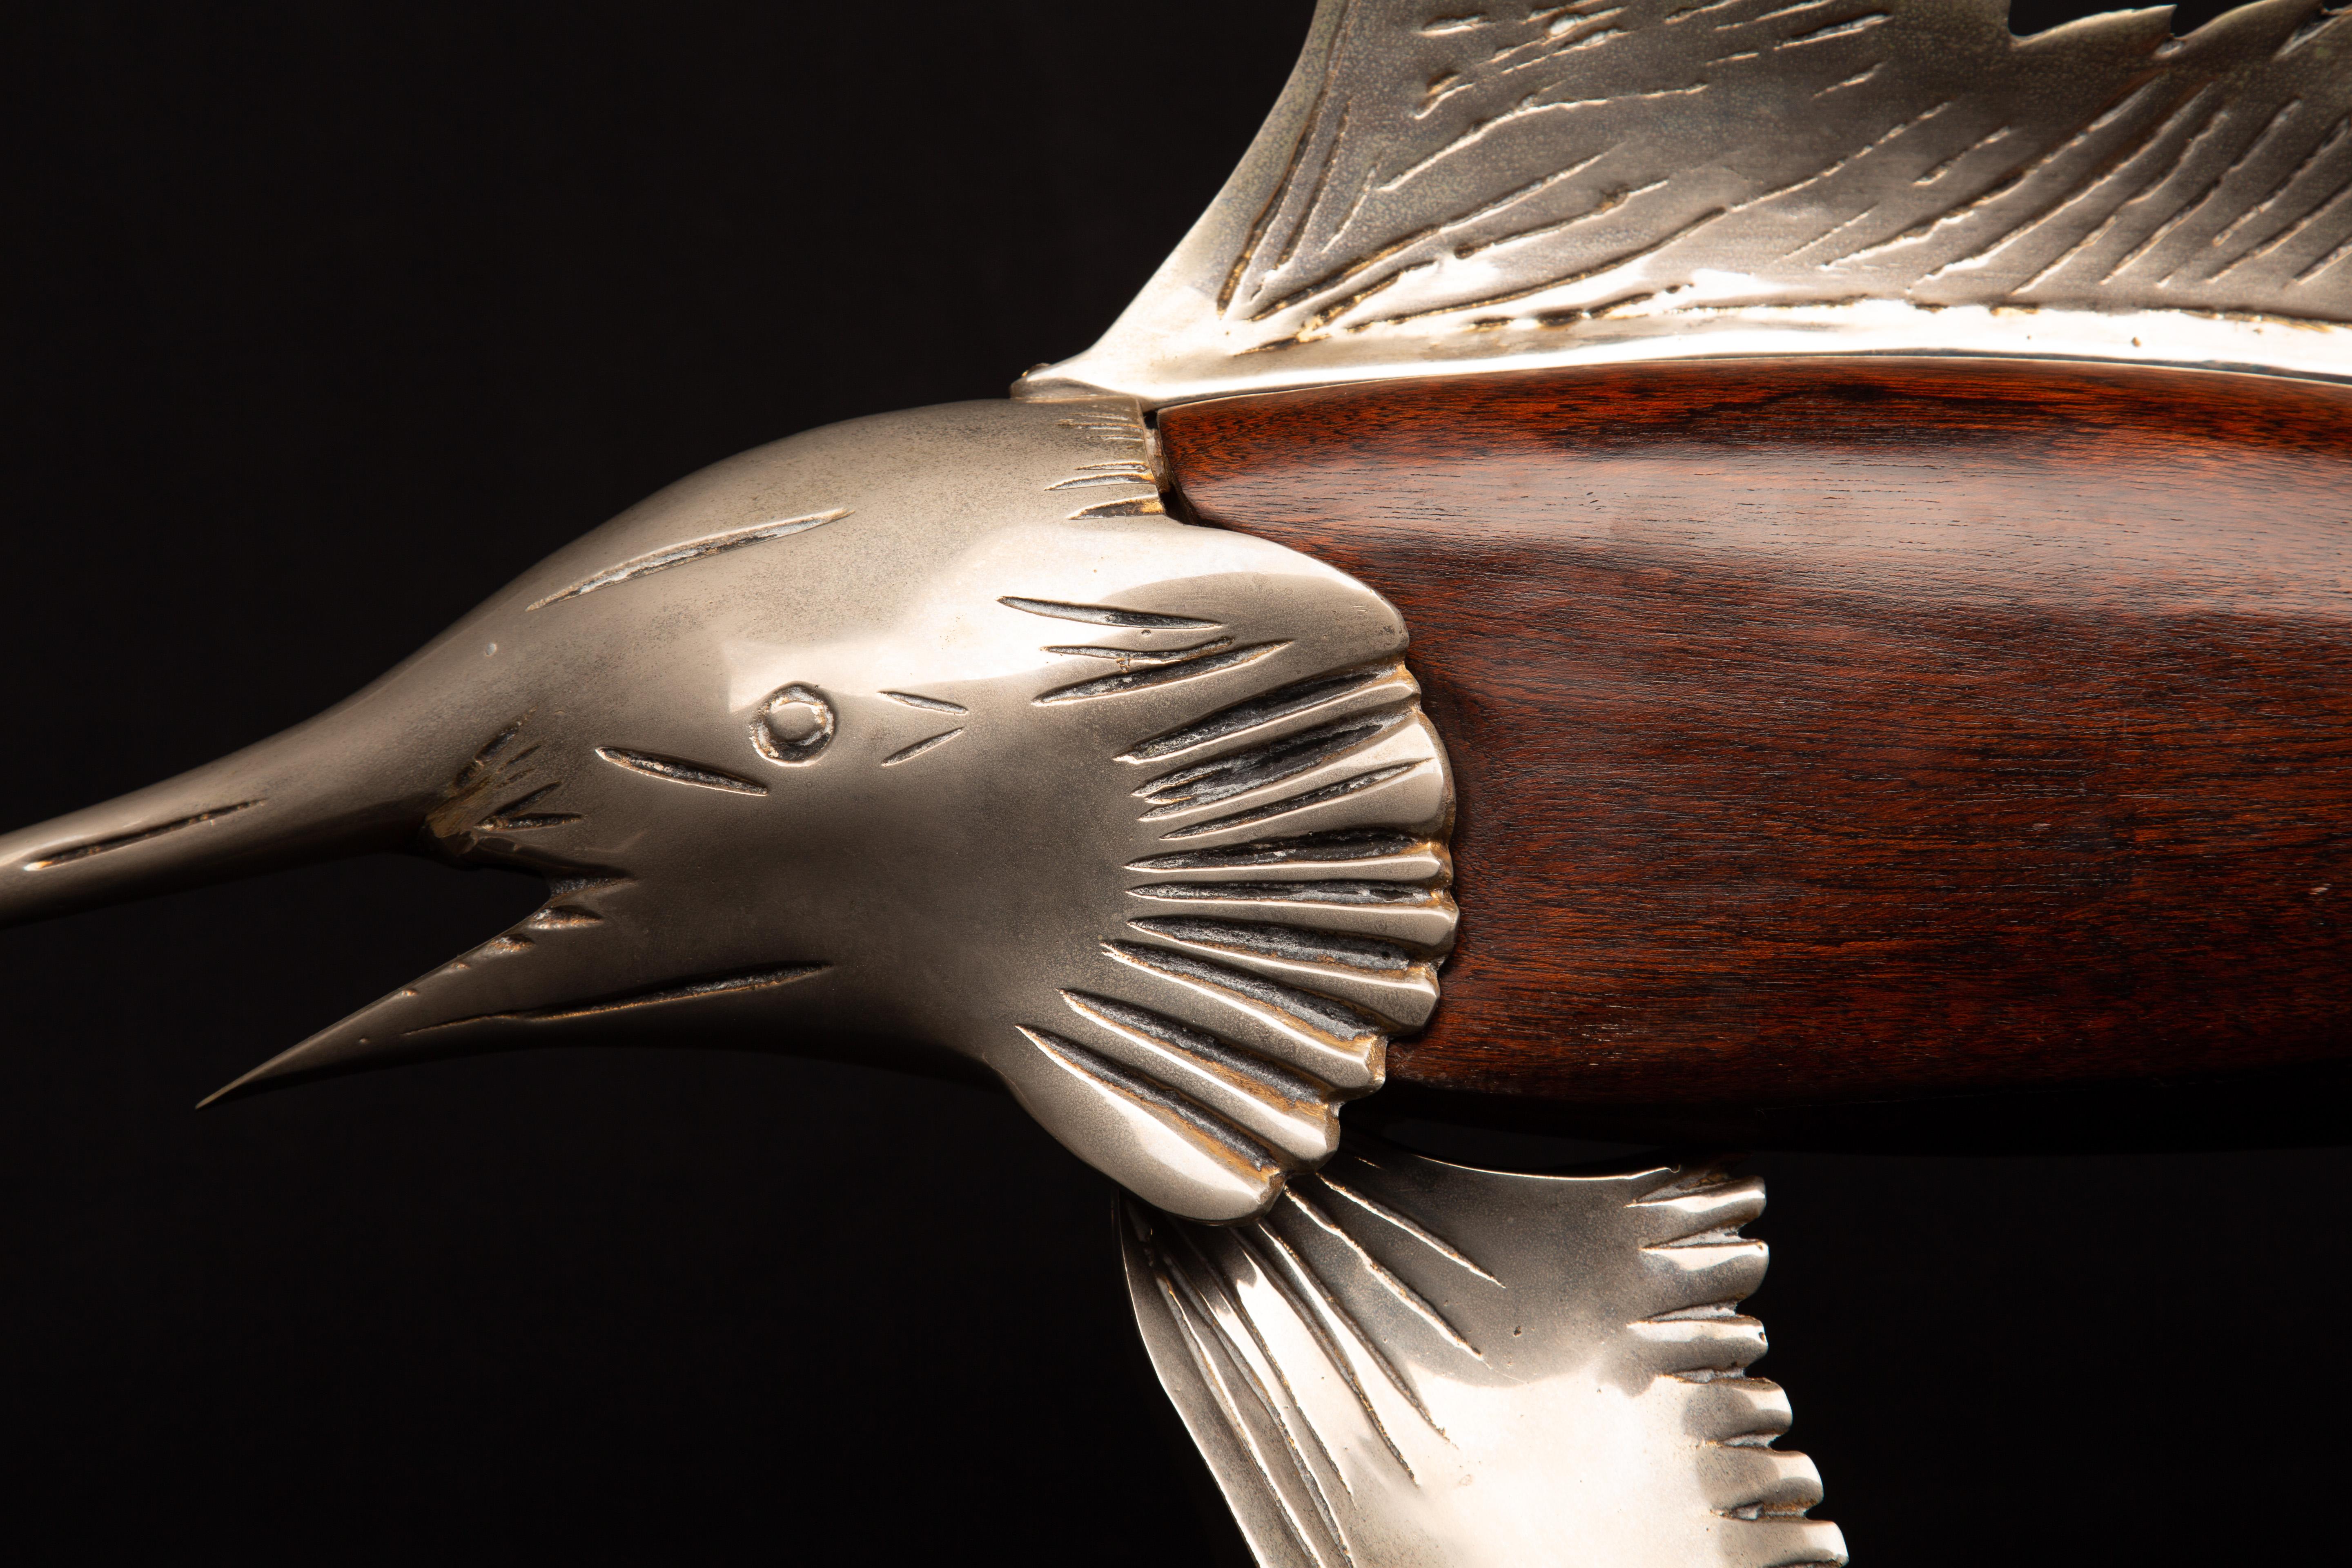 Mid-Century Modern metal and wood swordfish:

Measures: 36